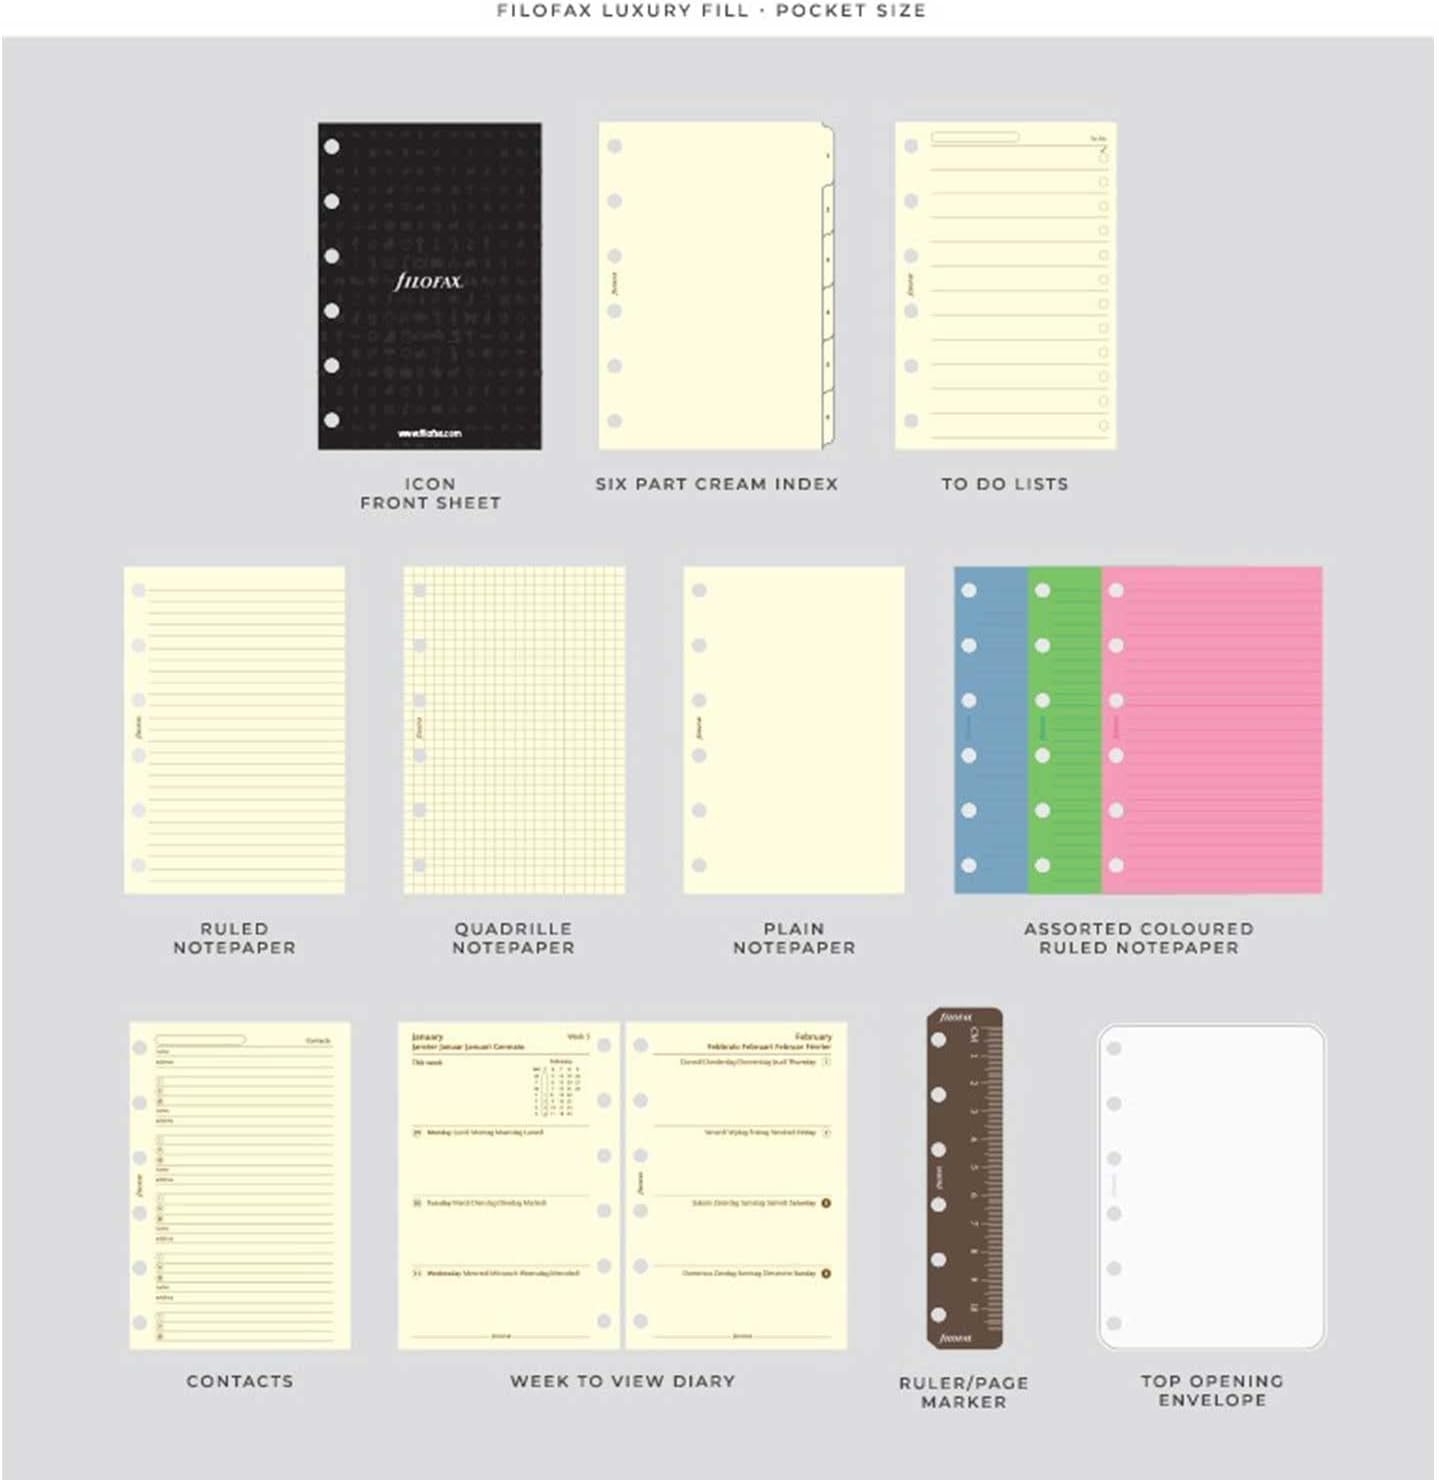 Filofax Classic Croc Print Pocket Silver Mist Leather Organizer Agenda Luxury Fill